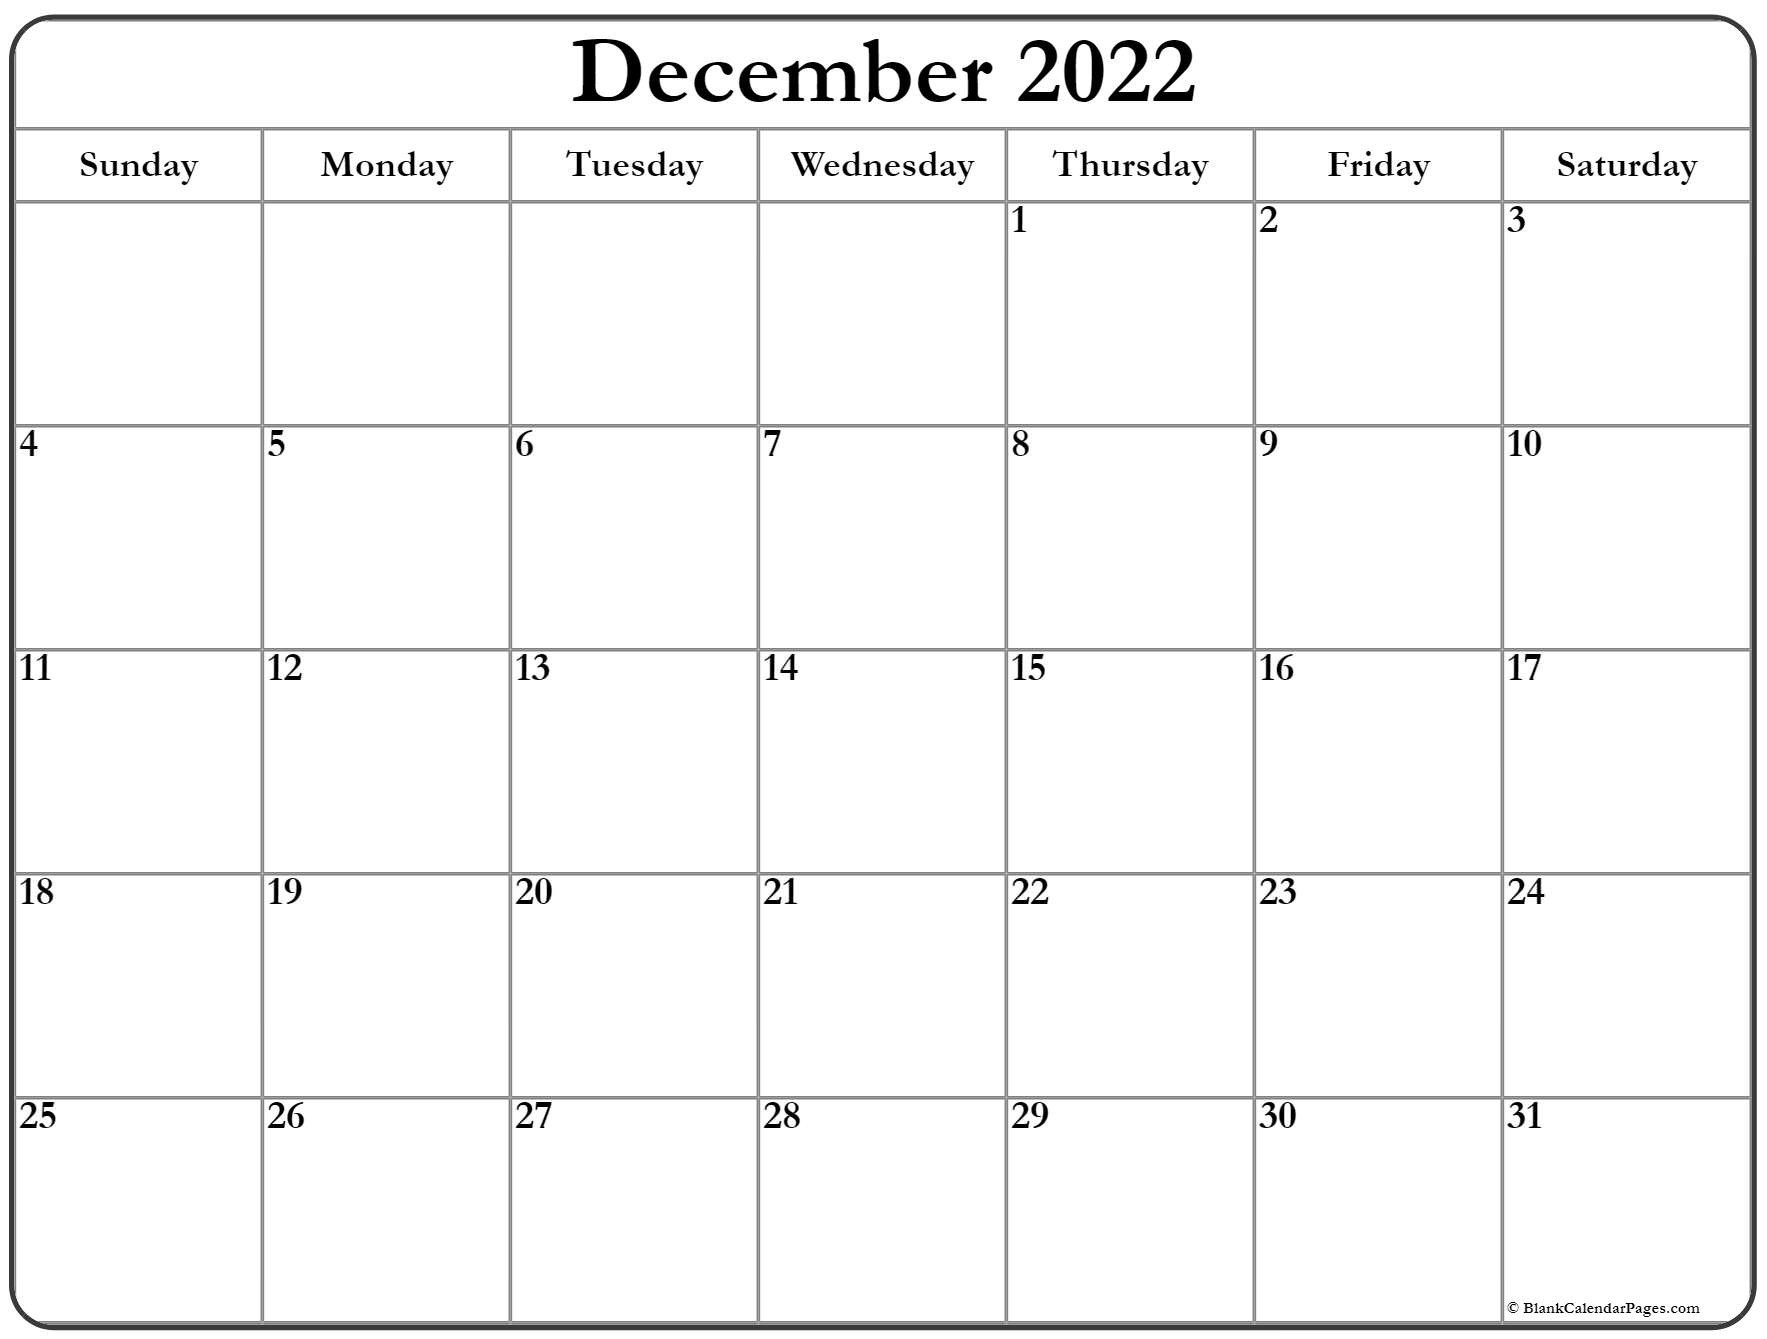 December 2022 Calendar | Free Printable Calendar Templates  December 2022 To December 2022 Calendar Printable